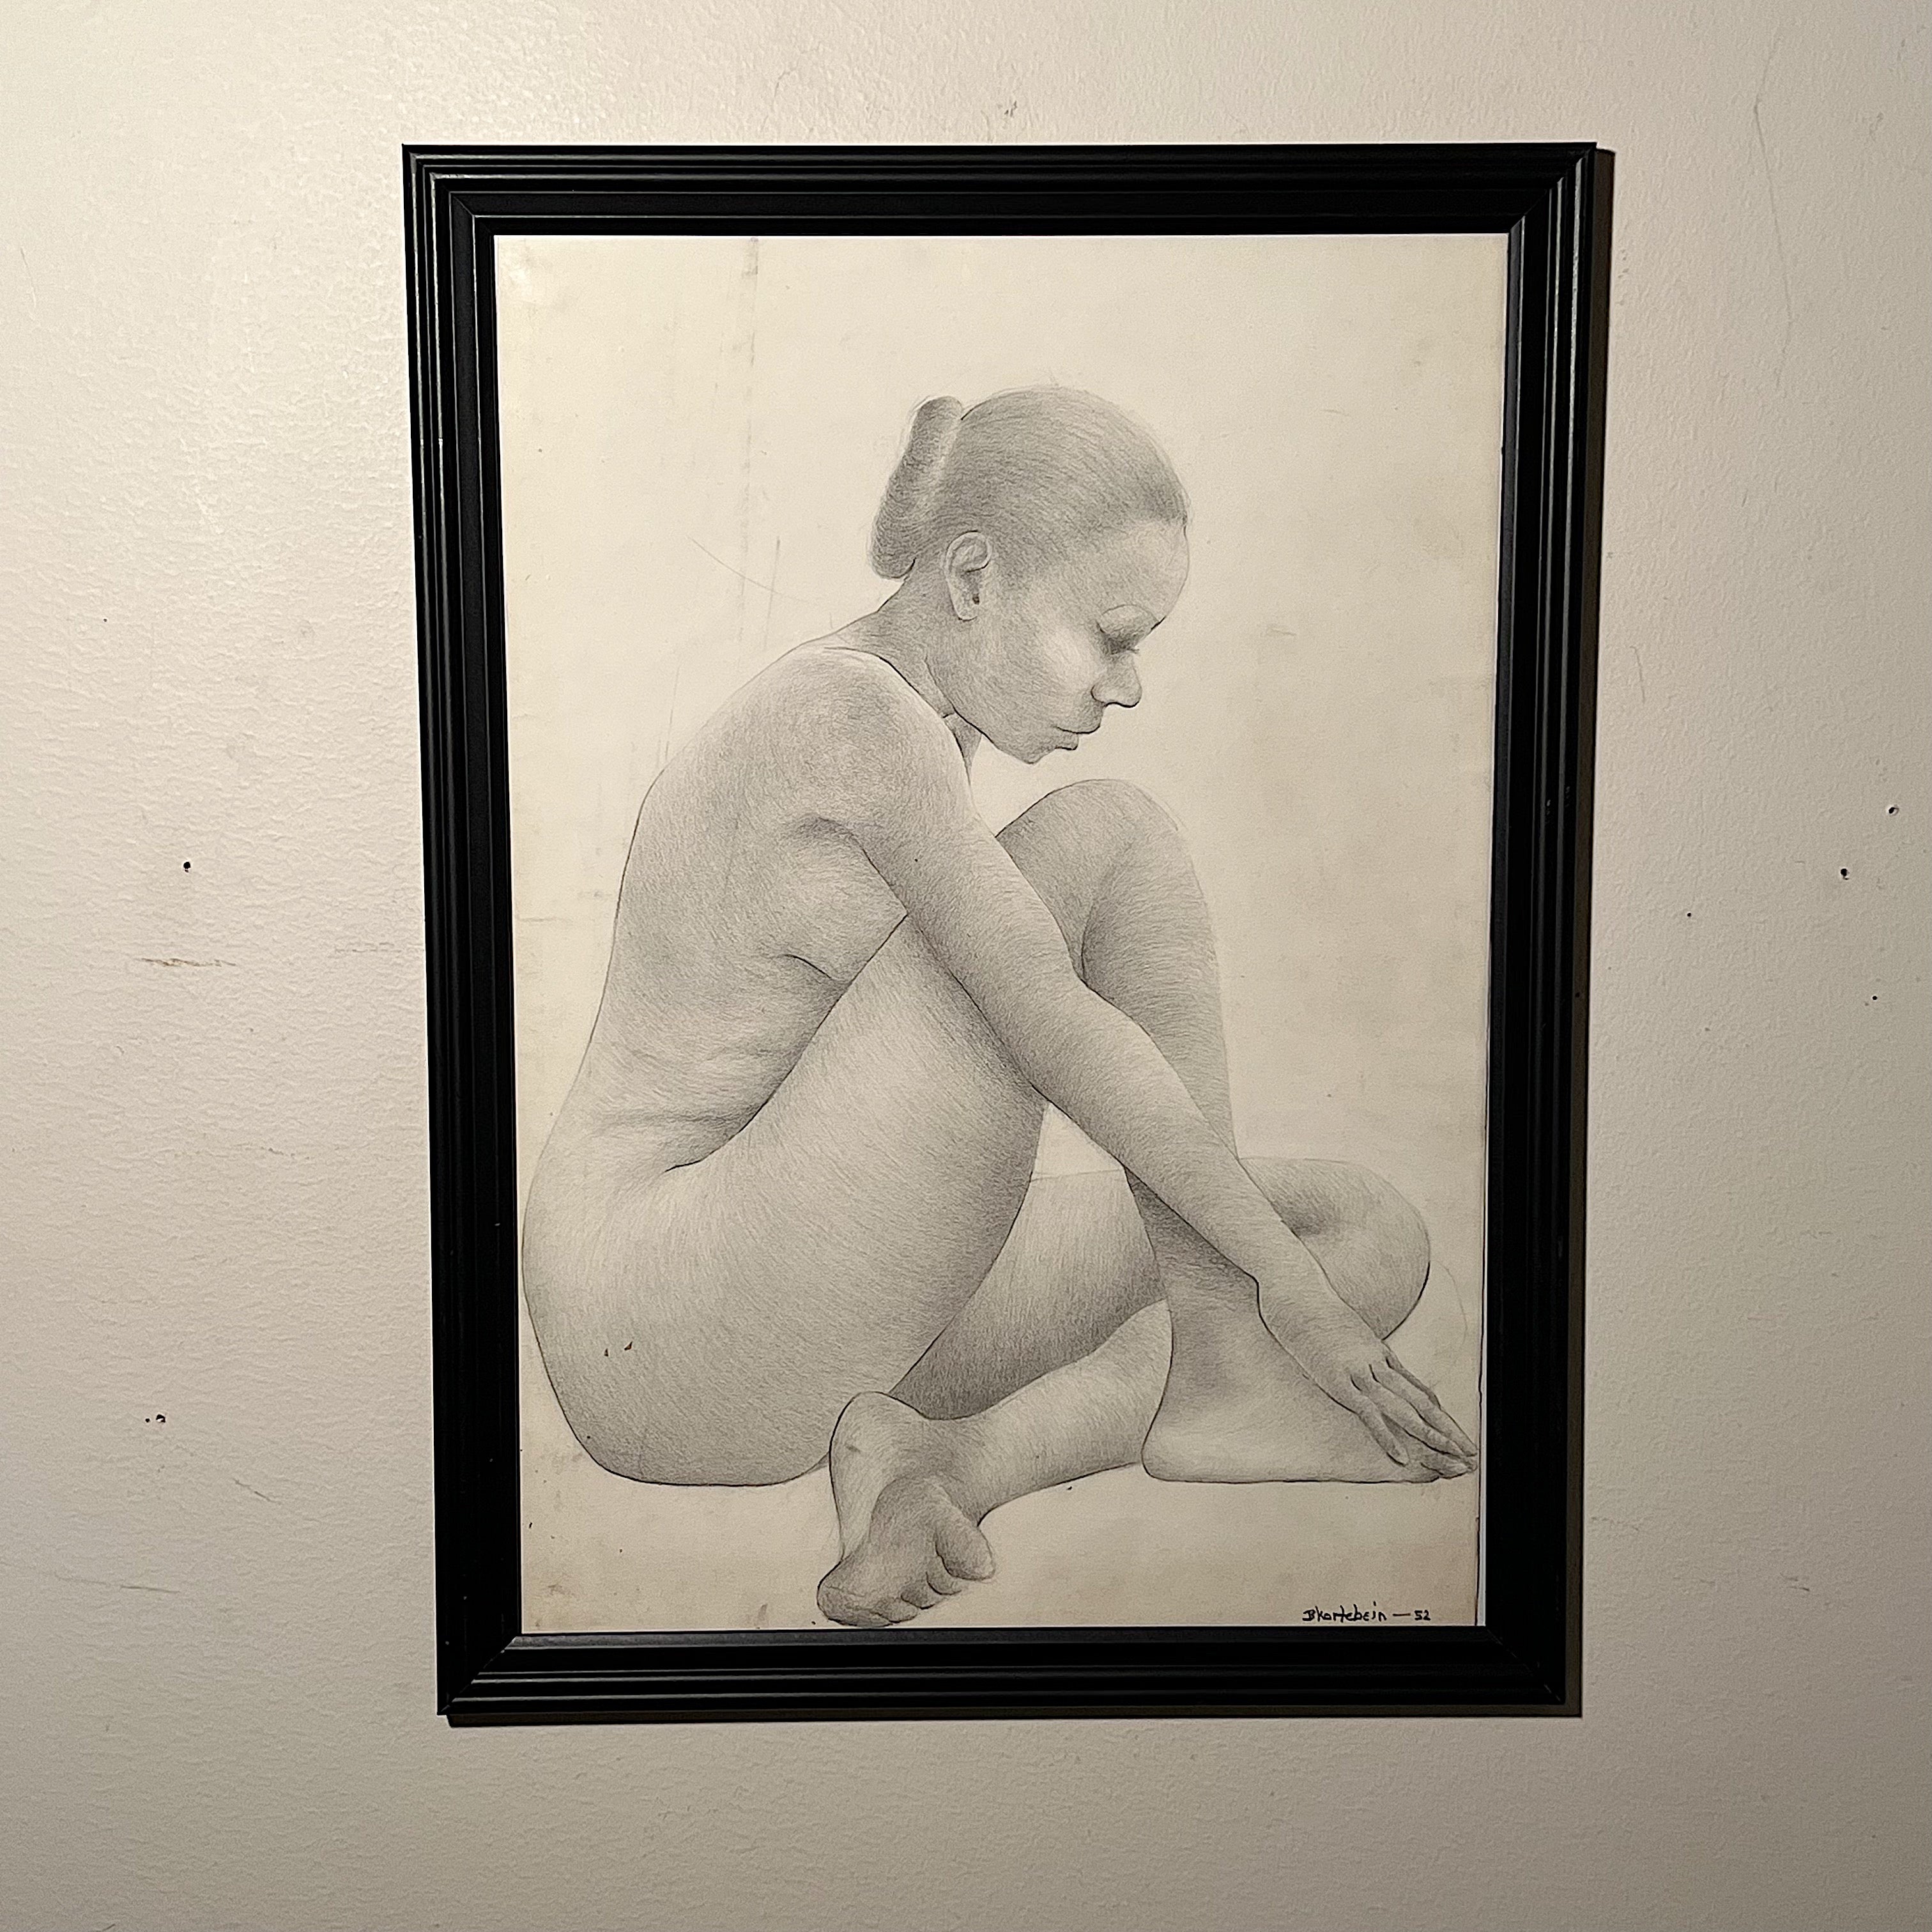 Rare Preston Heather Kortebein Drawing of Nude Woman - 1952 Chicago Institute of Art - Rare 1950s Portrait Artwork - African American Art